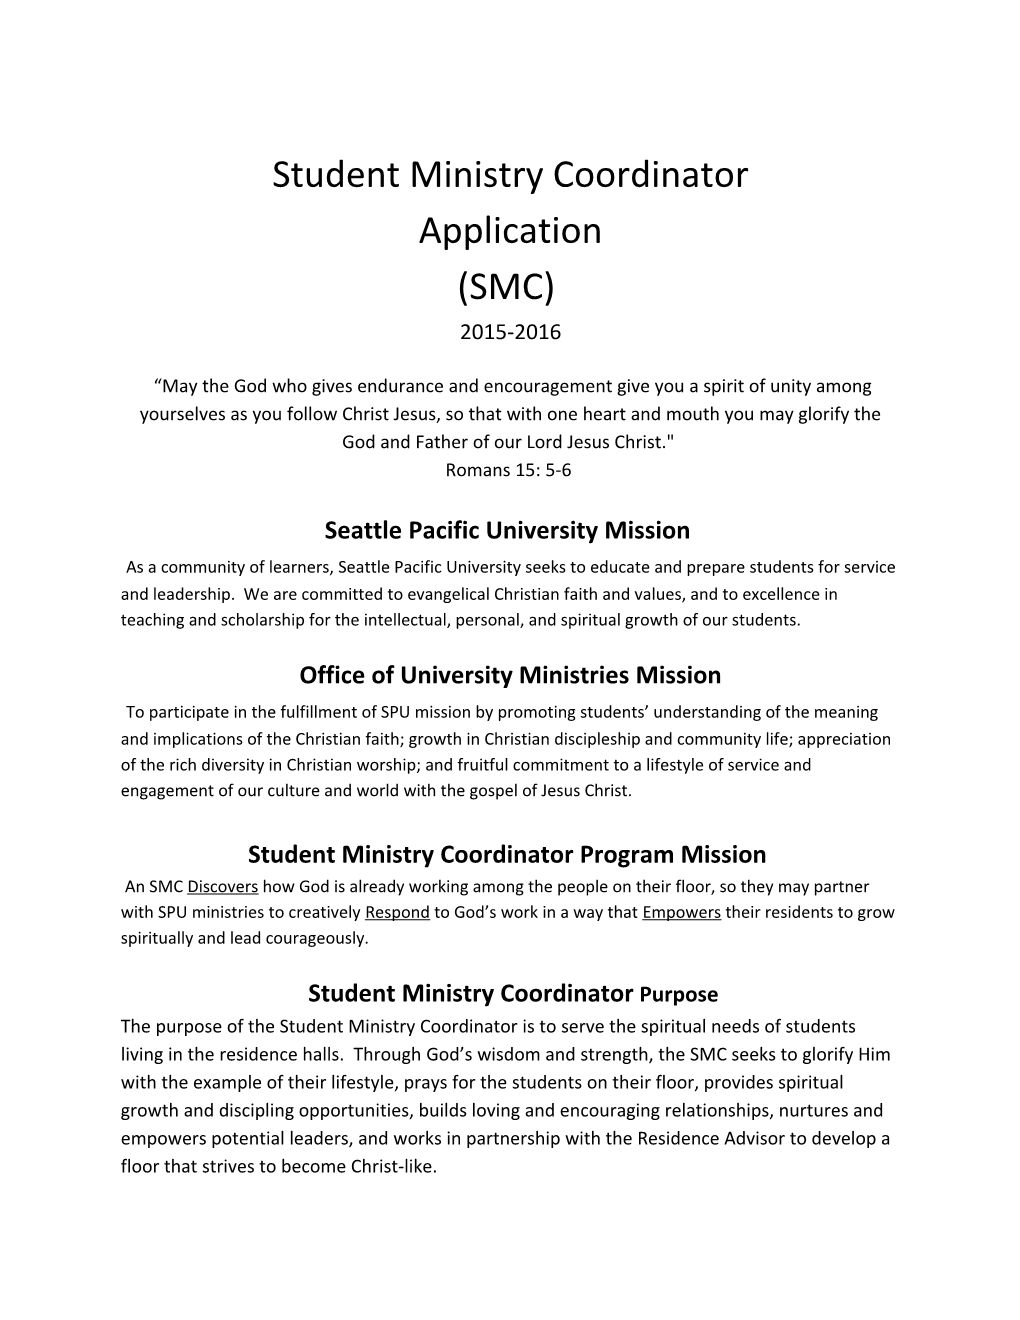 Seattle Pacific University Mission